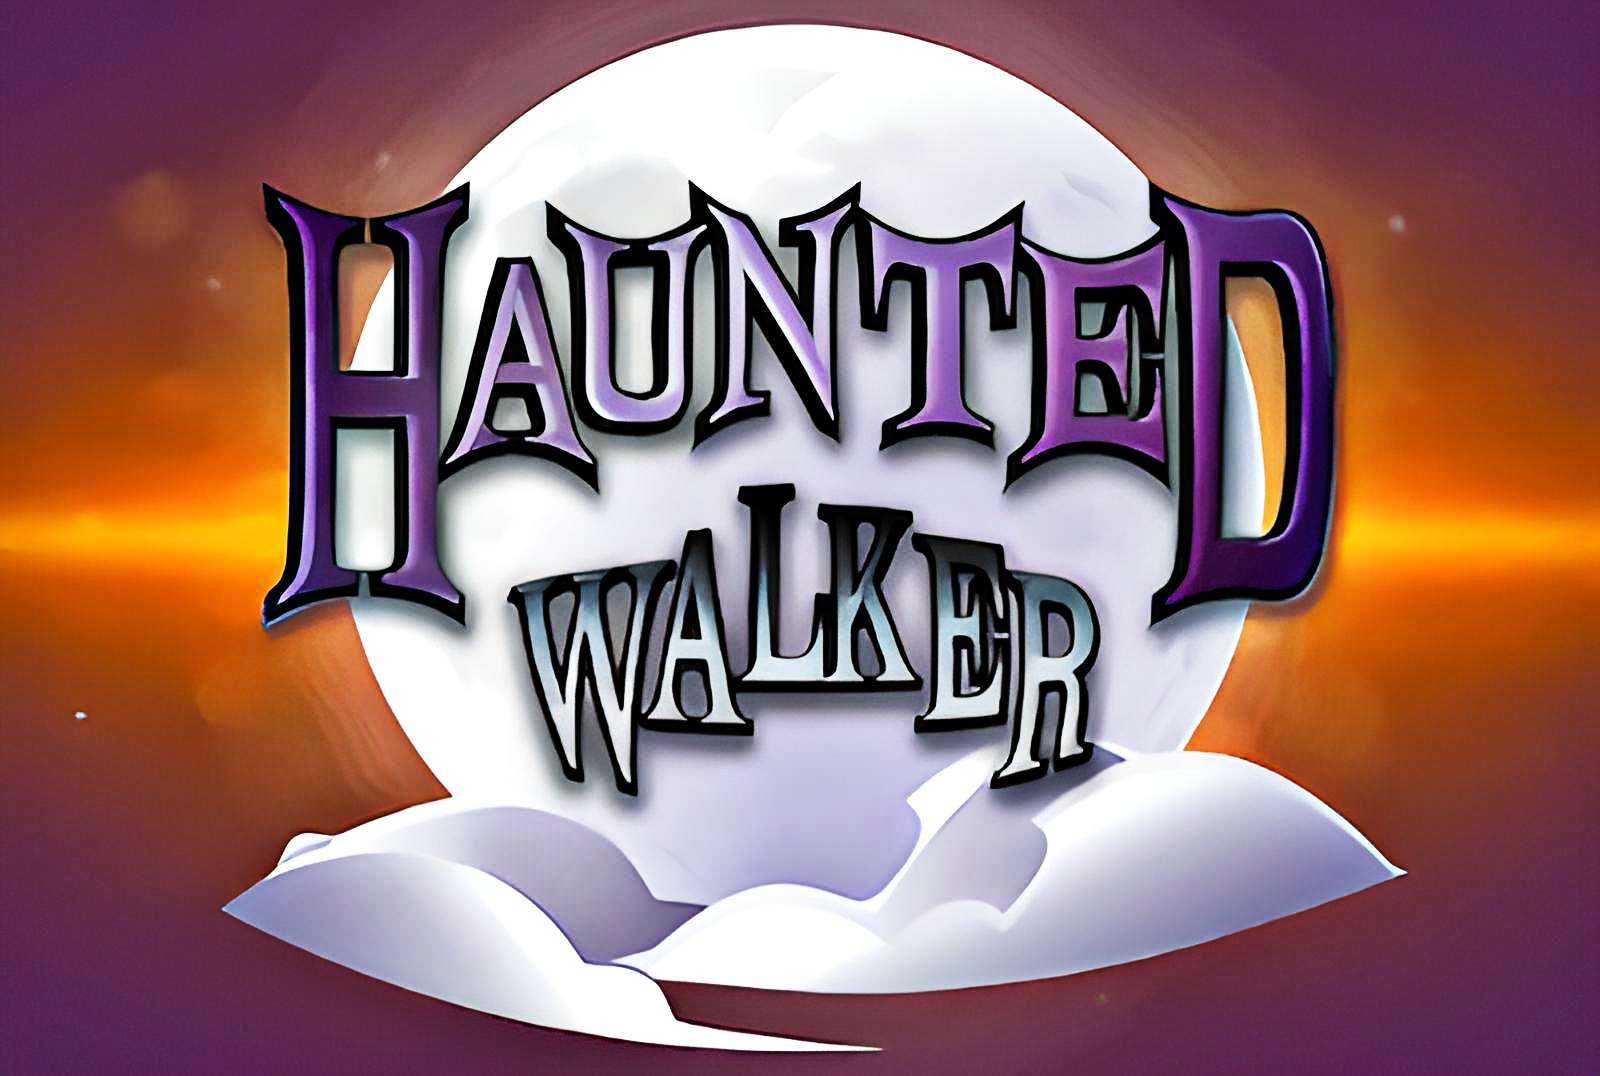 hauntedwalker